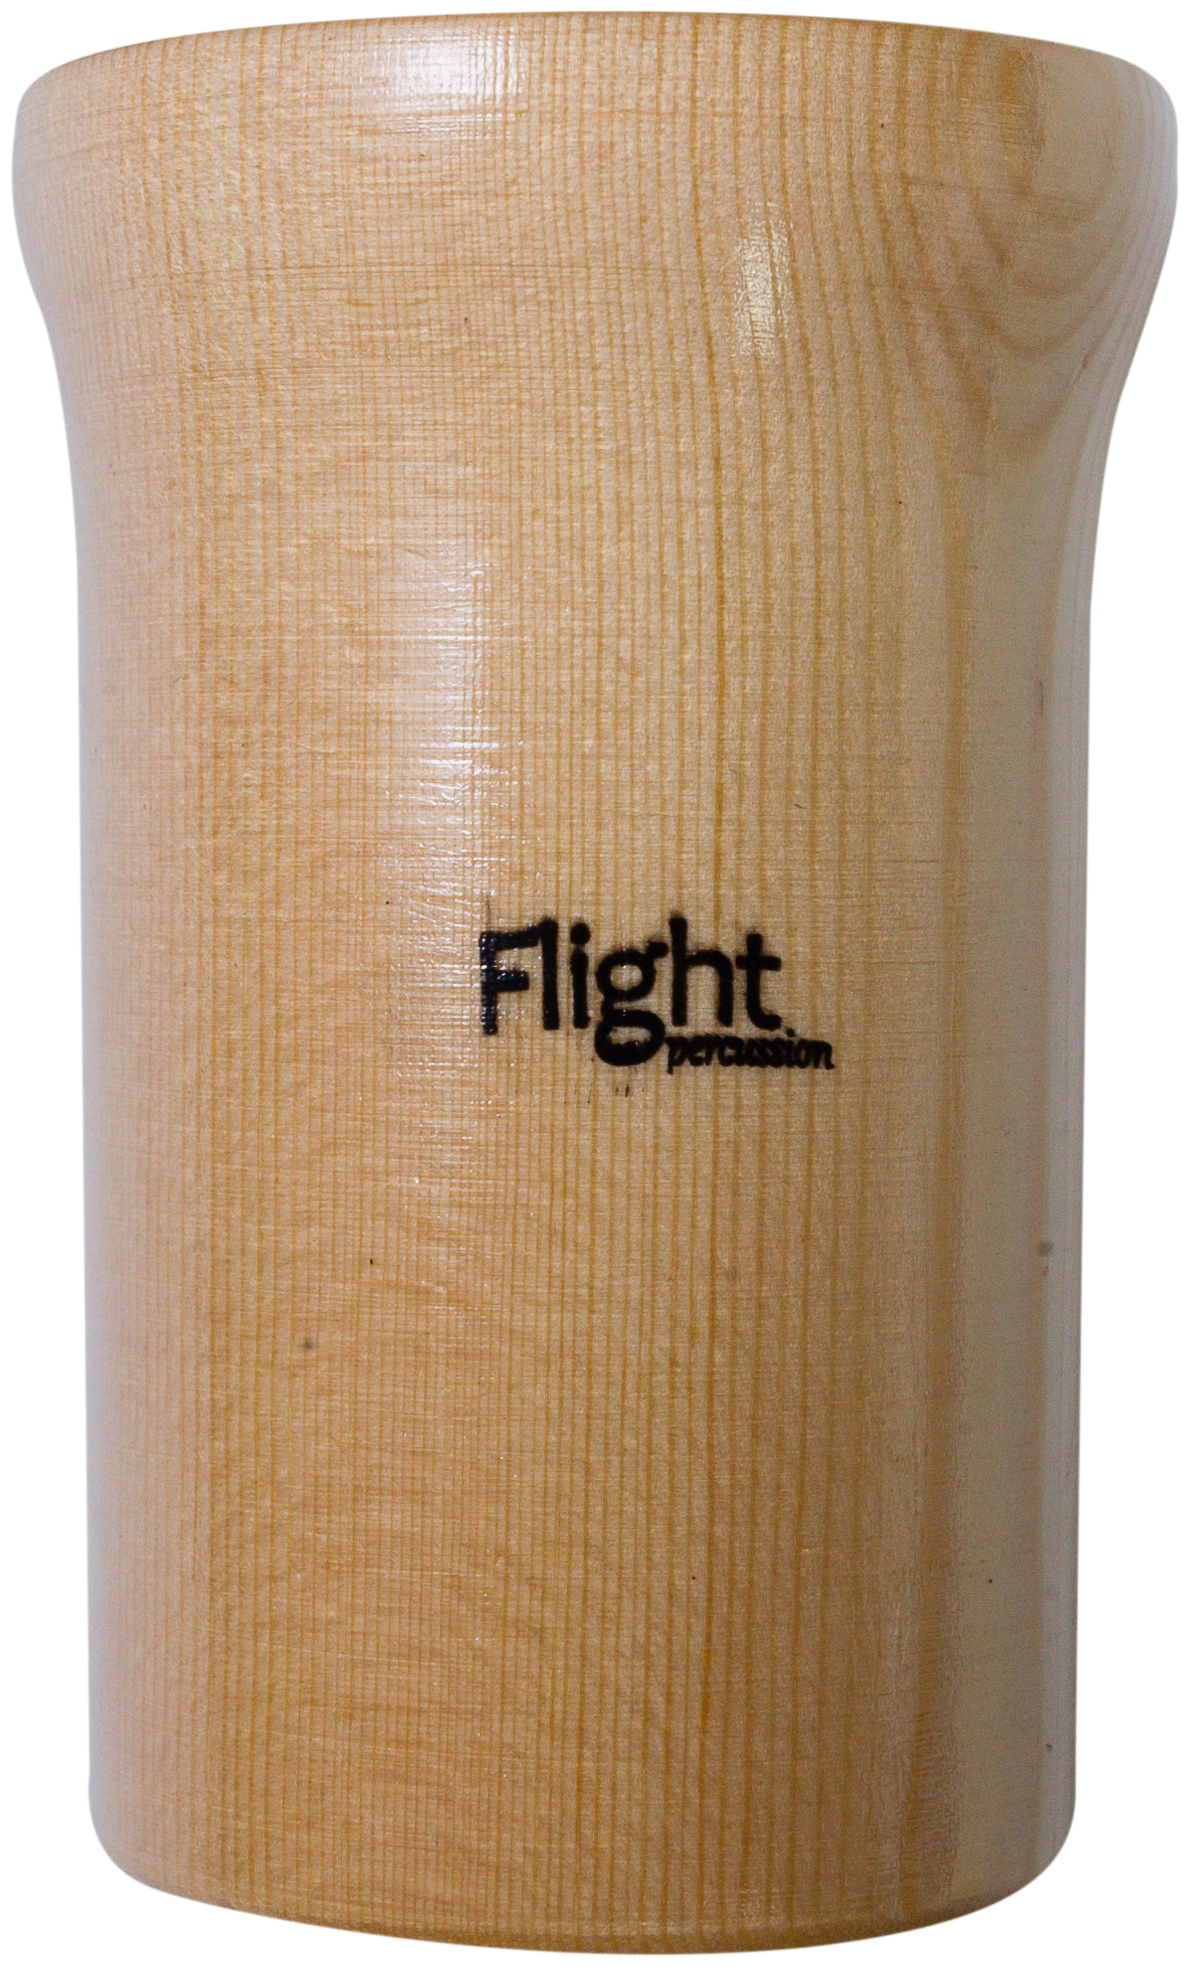 Flight Fww-1 - свисток деревянный